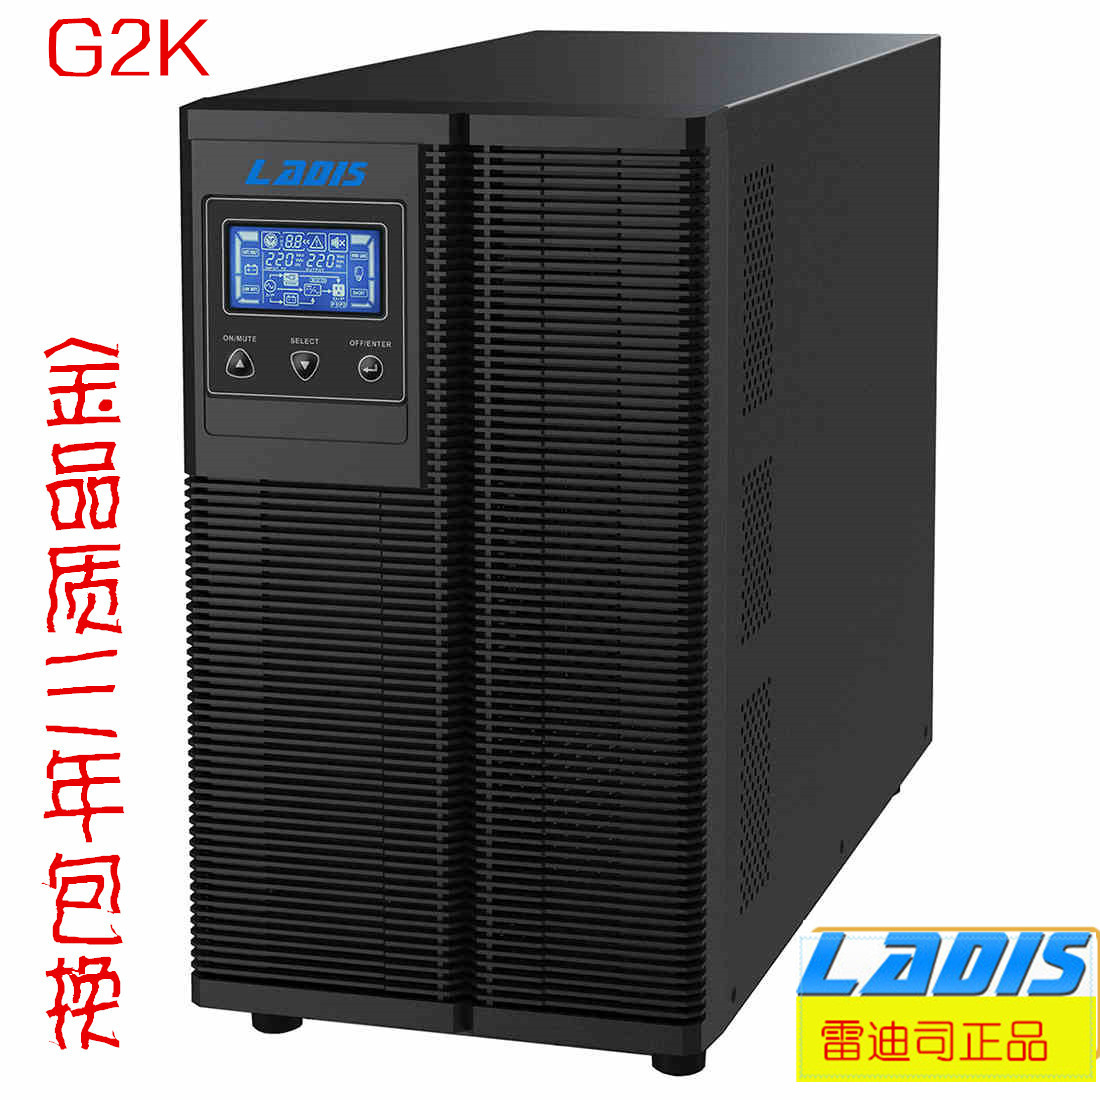 Redis UPS uninterruptible power supply G2K on-line 2000VA1600W on-line built-in imported batteries